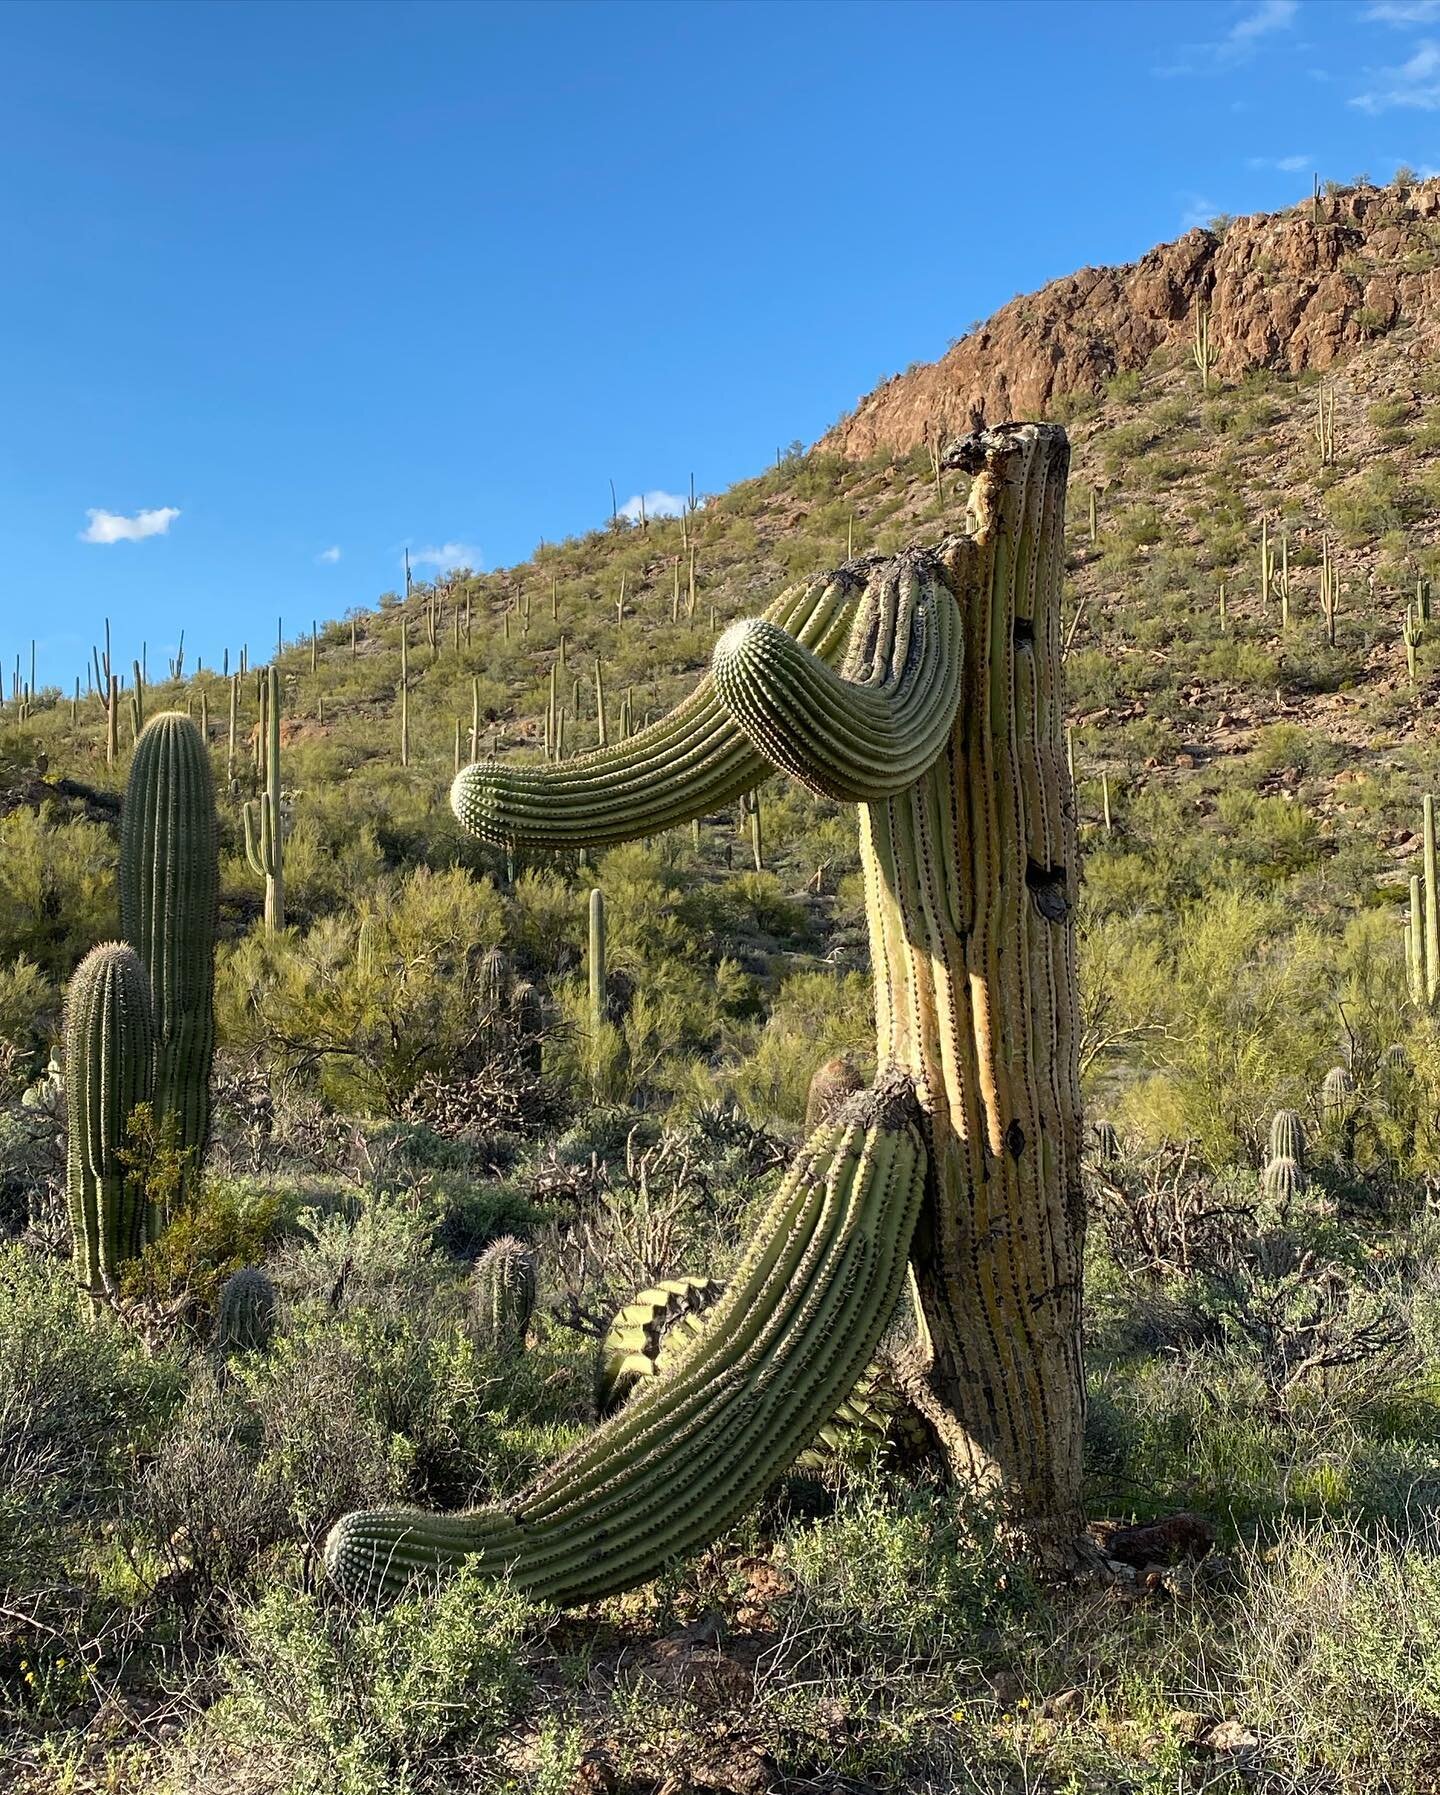 My favorite cacti 🌵 and that Arizona sky 💕